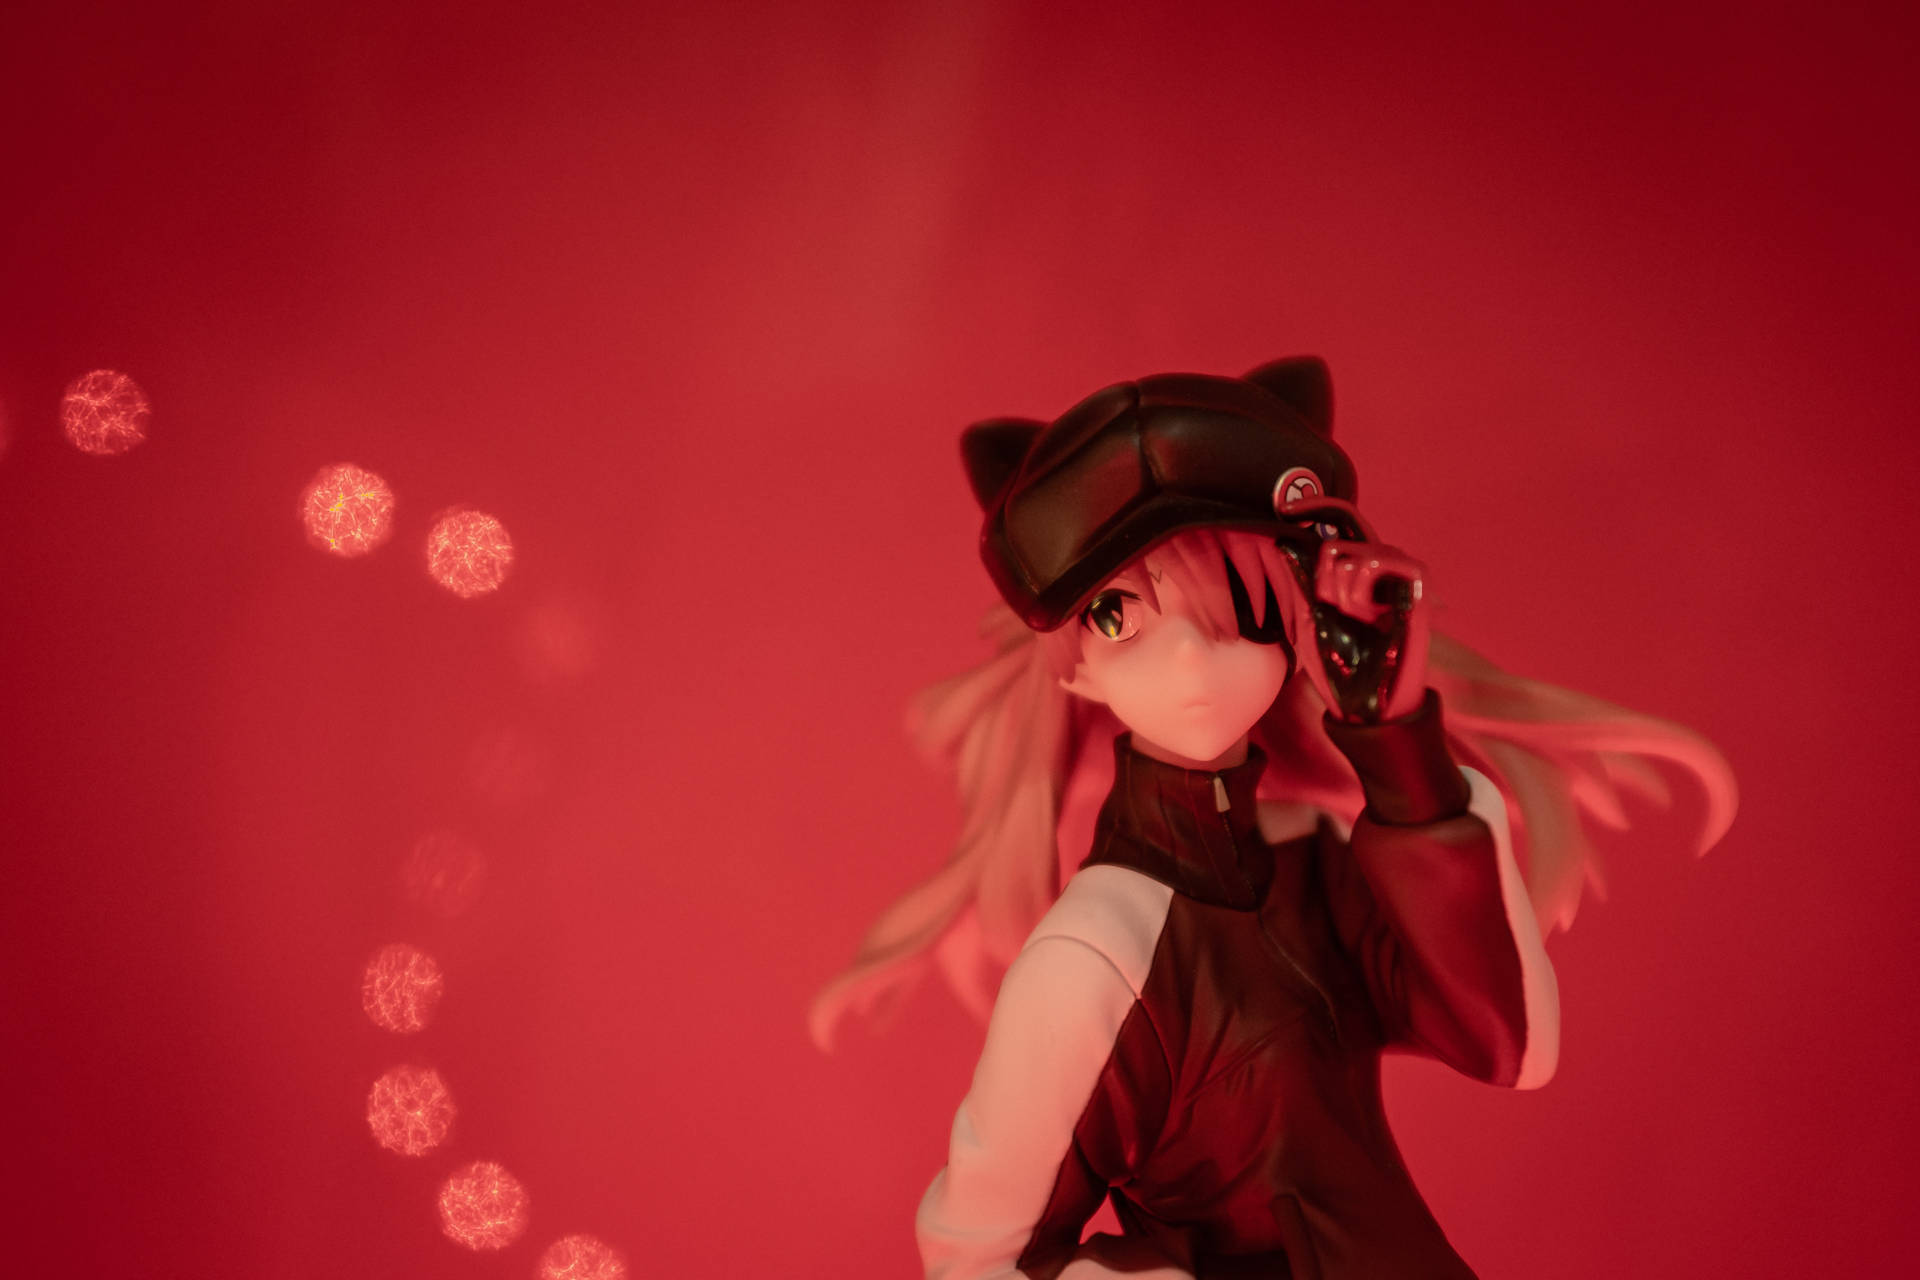 Anime Girl With Eyepatch Animated Desktop Background